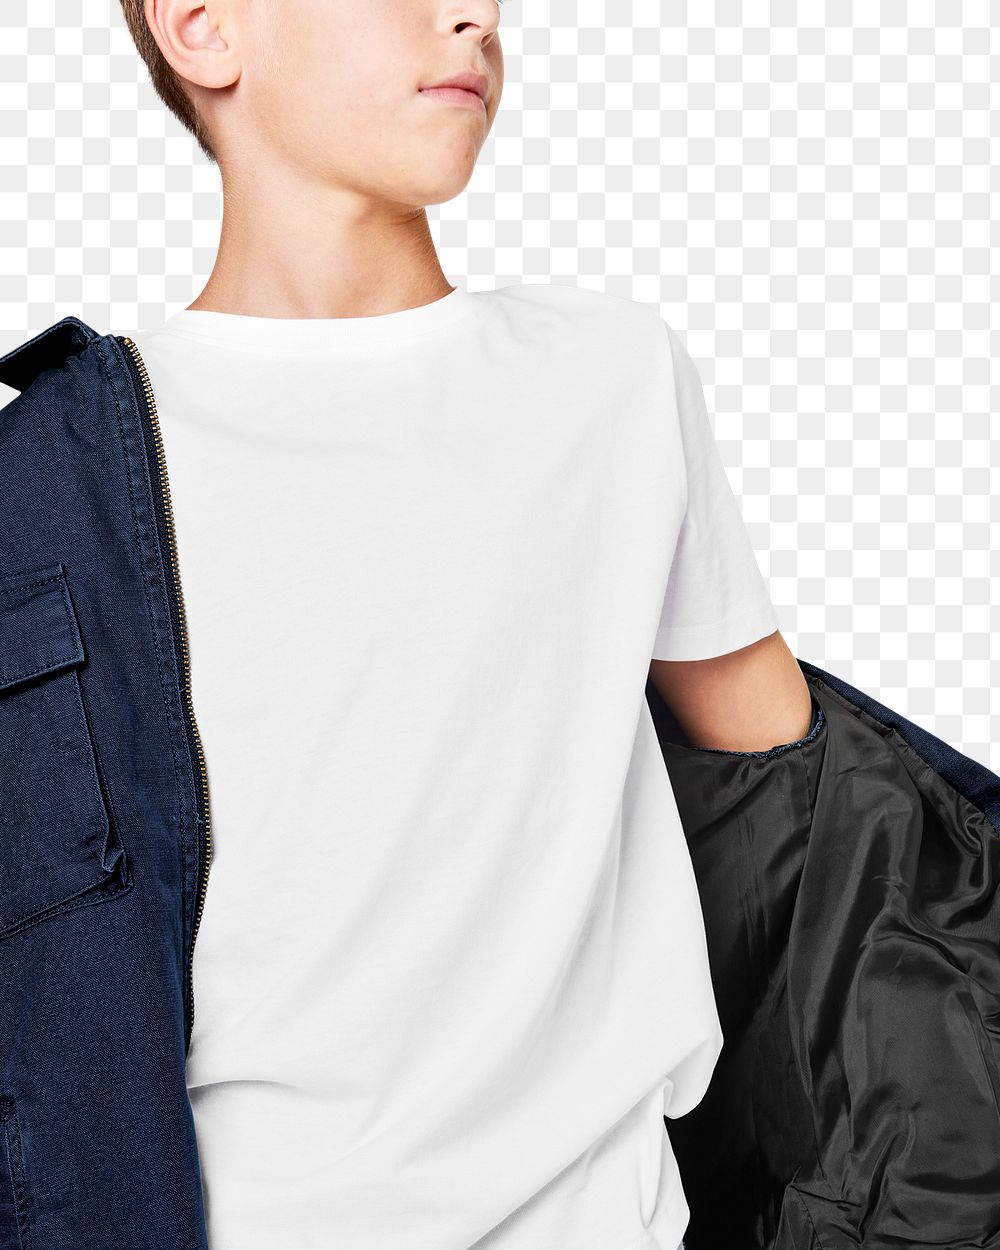 T-shirt png on transparent background, kid's editable apparel design 